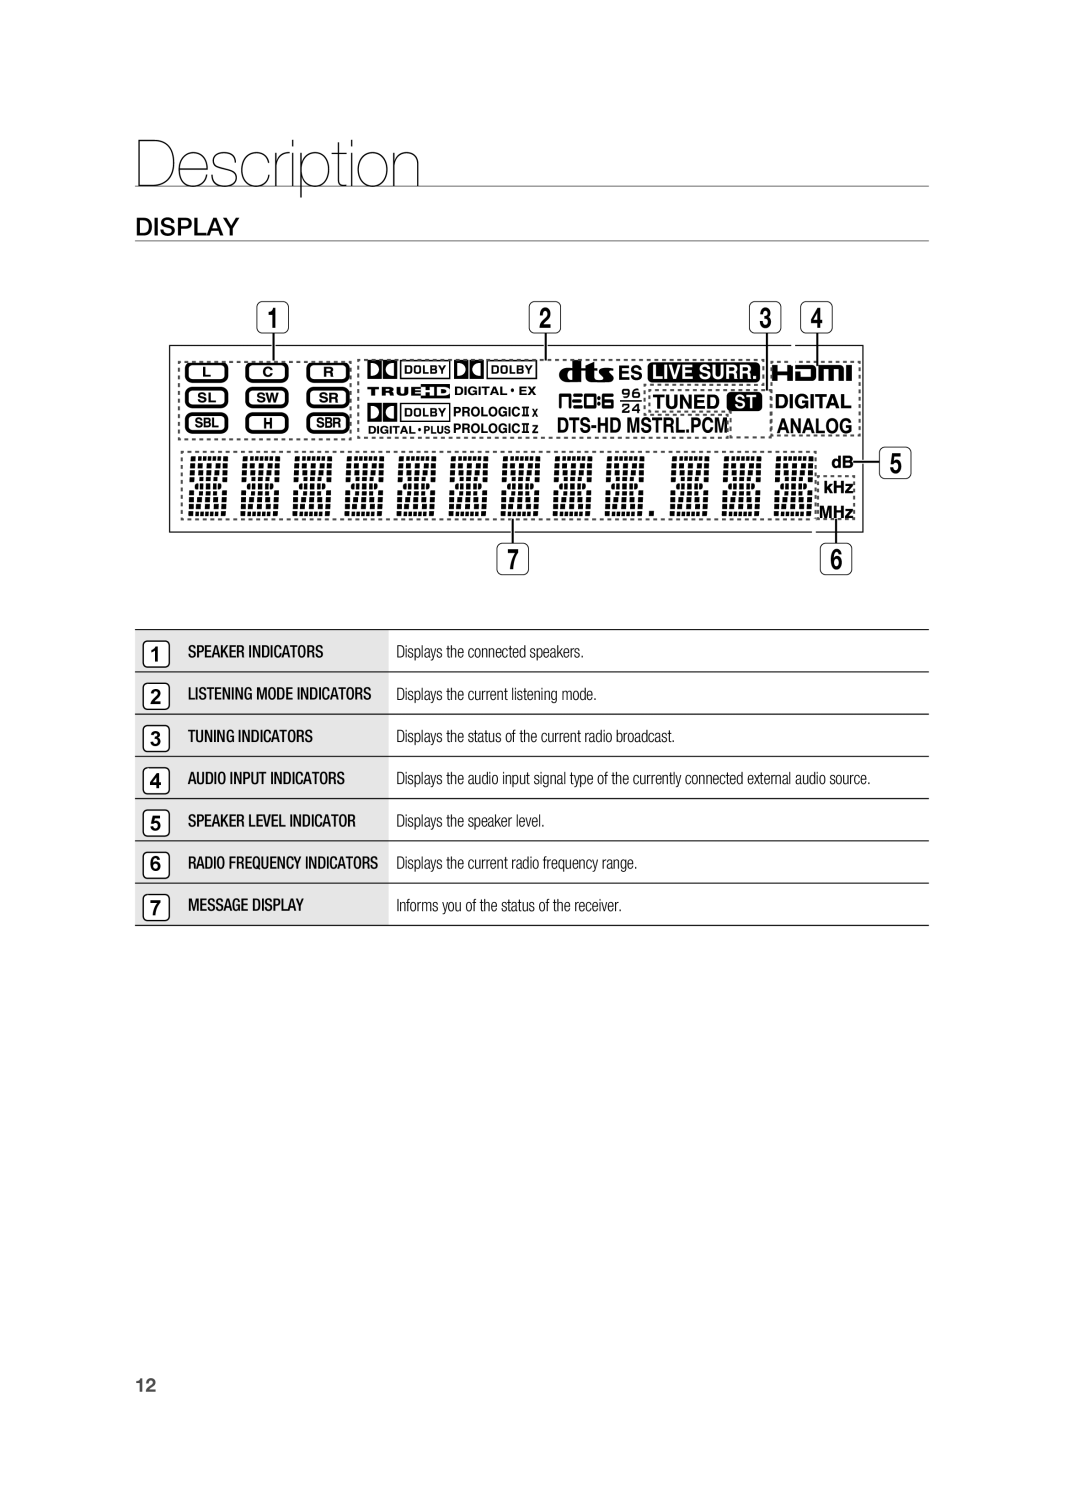 Samsung HW-C900-XAA user manual Display, Description 